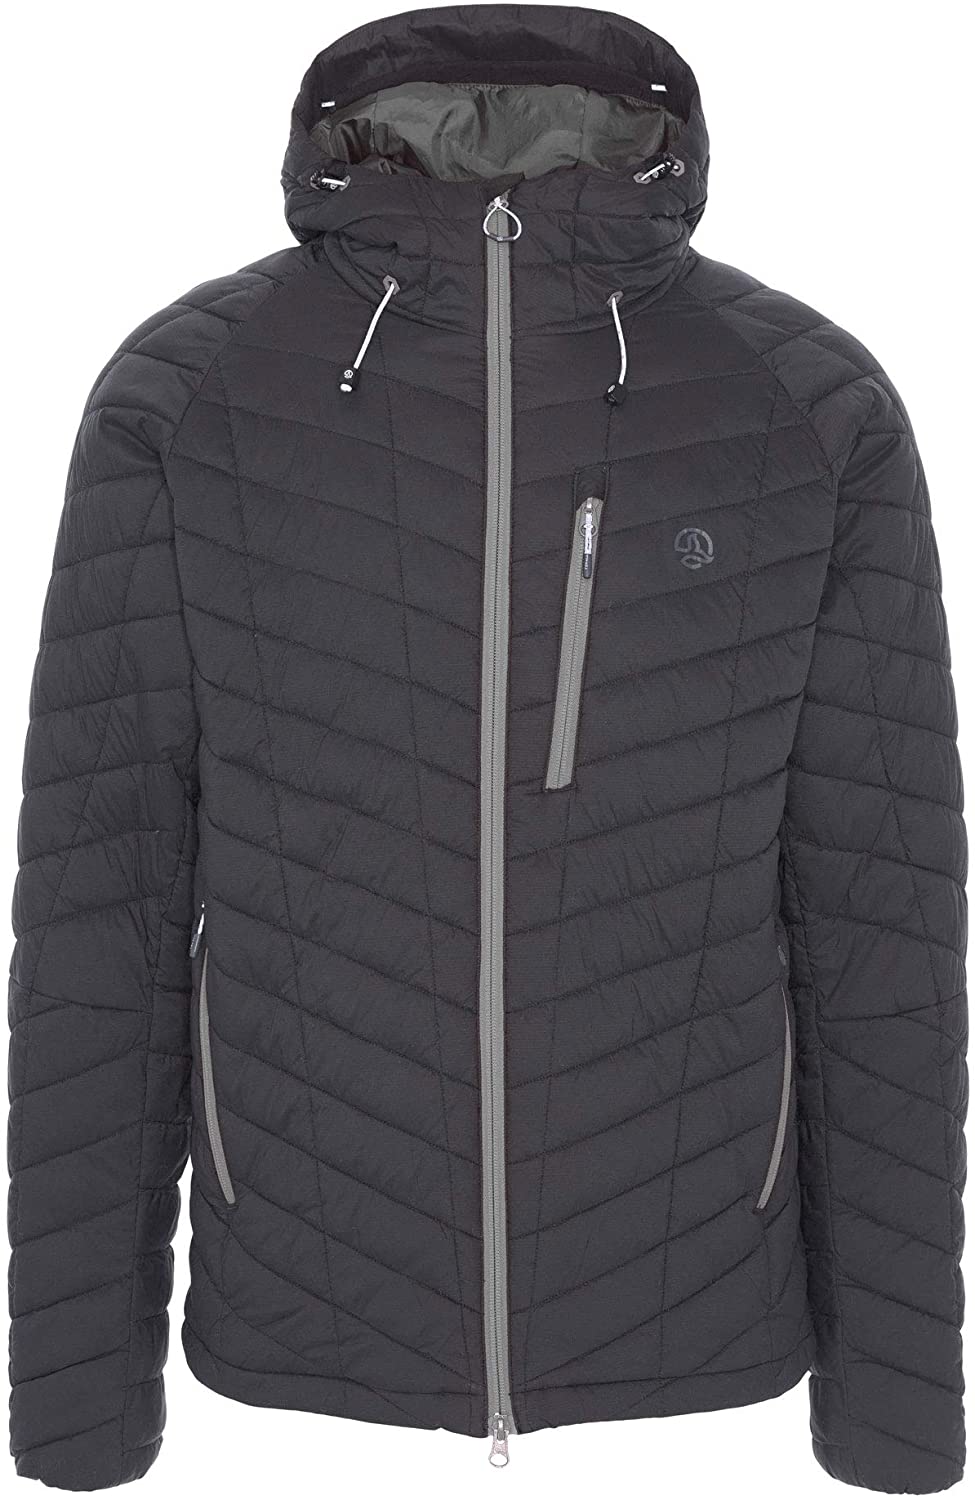 Ternua Glacier Jacket - Synthetic jacket - Men's